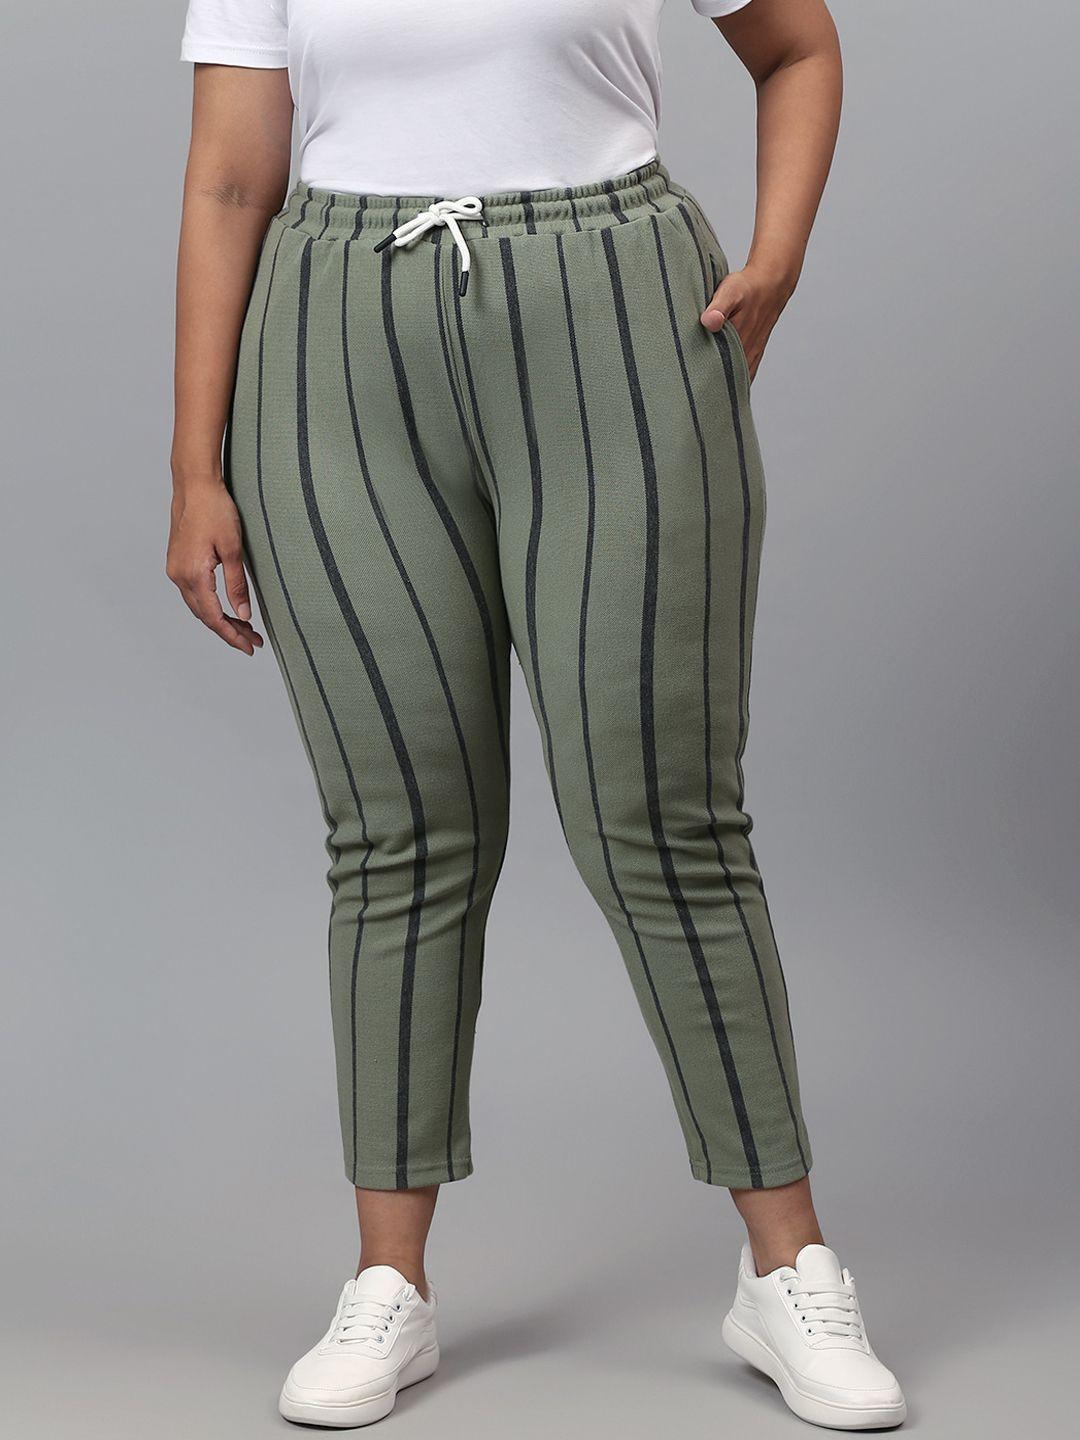 instafab plus women green & black striped cotton track pants